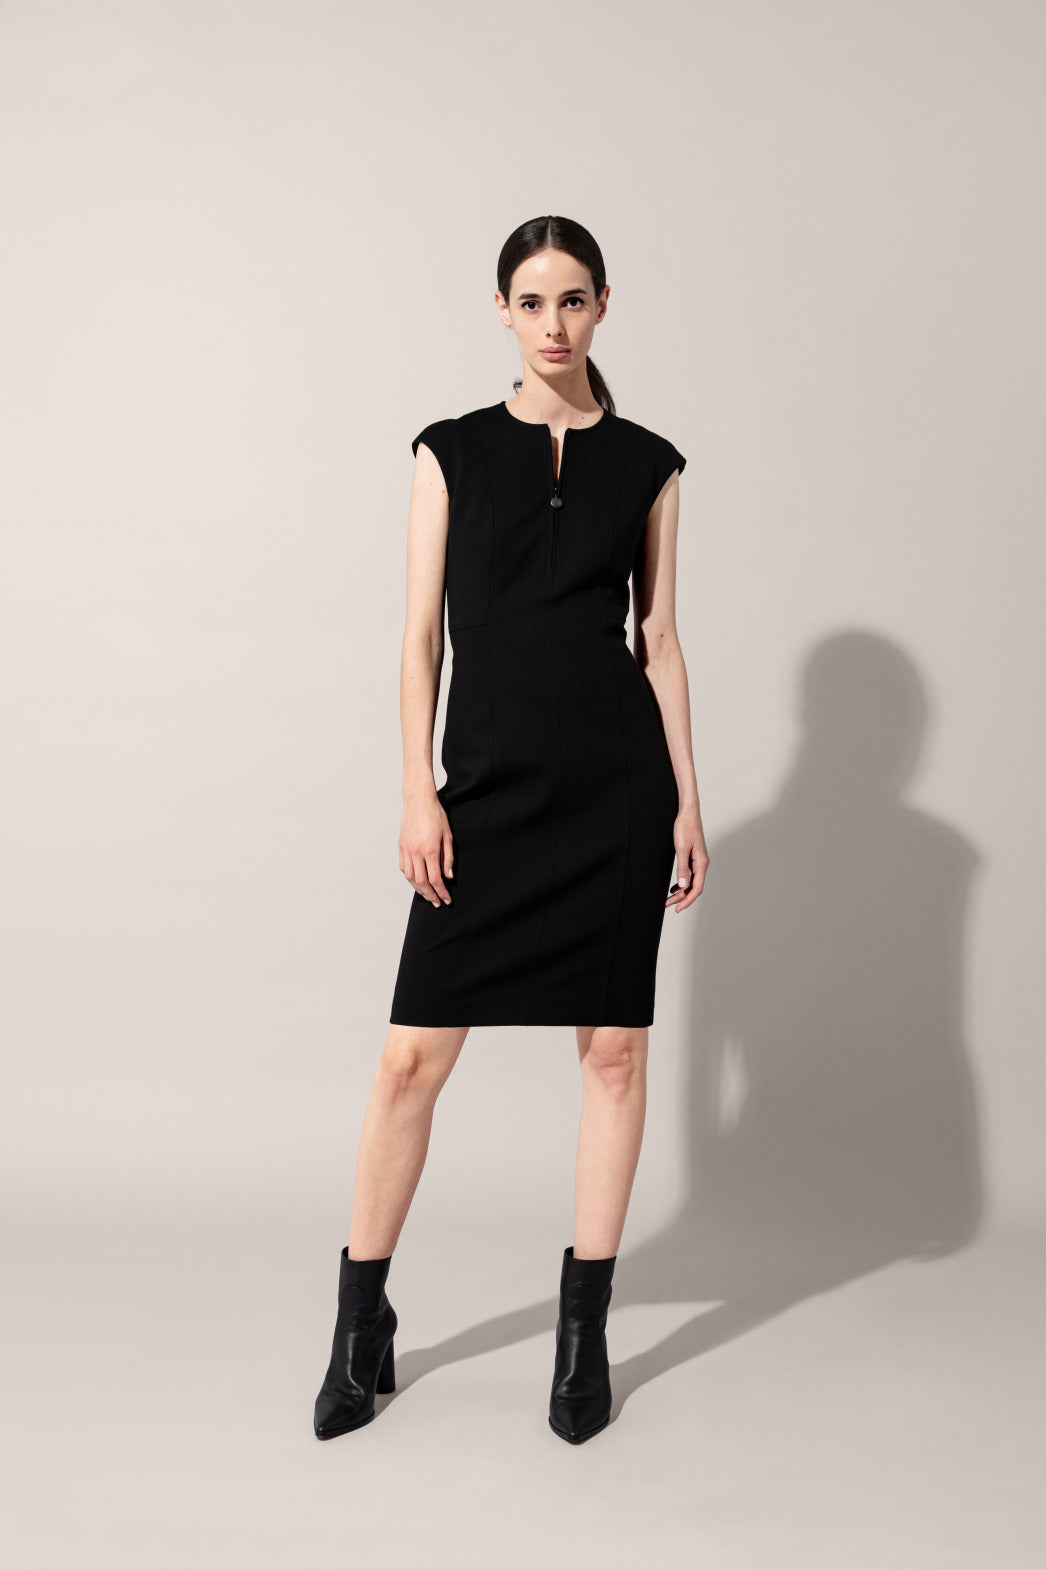 Akris Punto Elements Long Sleeve Fit & Flare Dress in Black